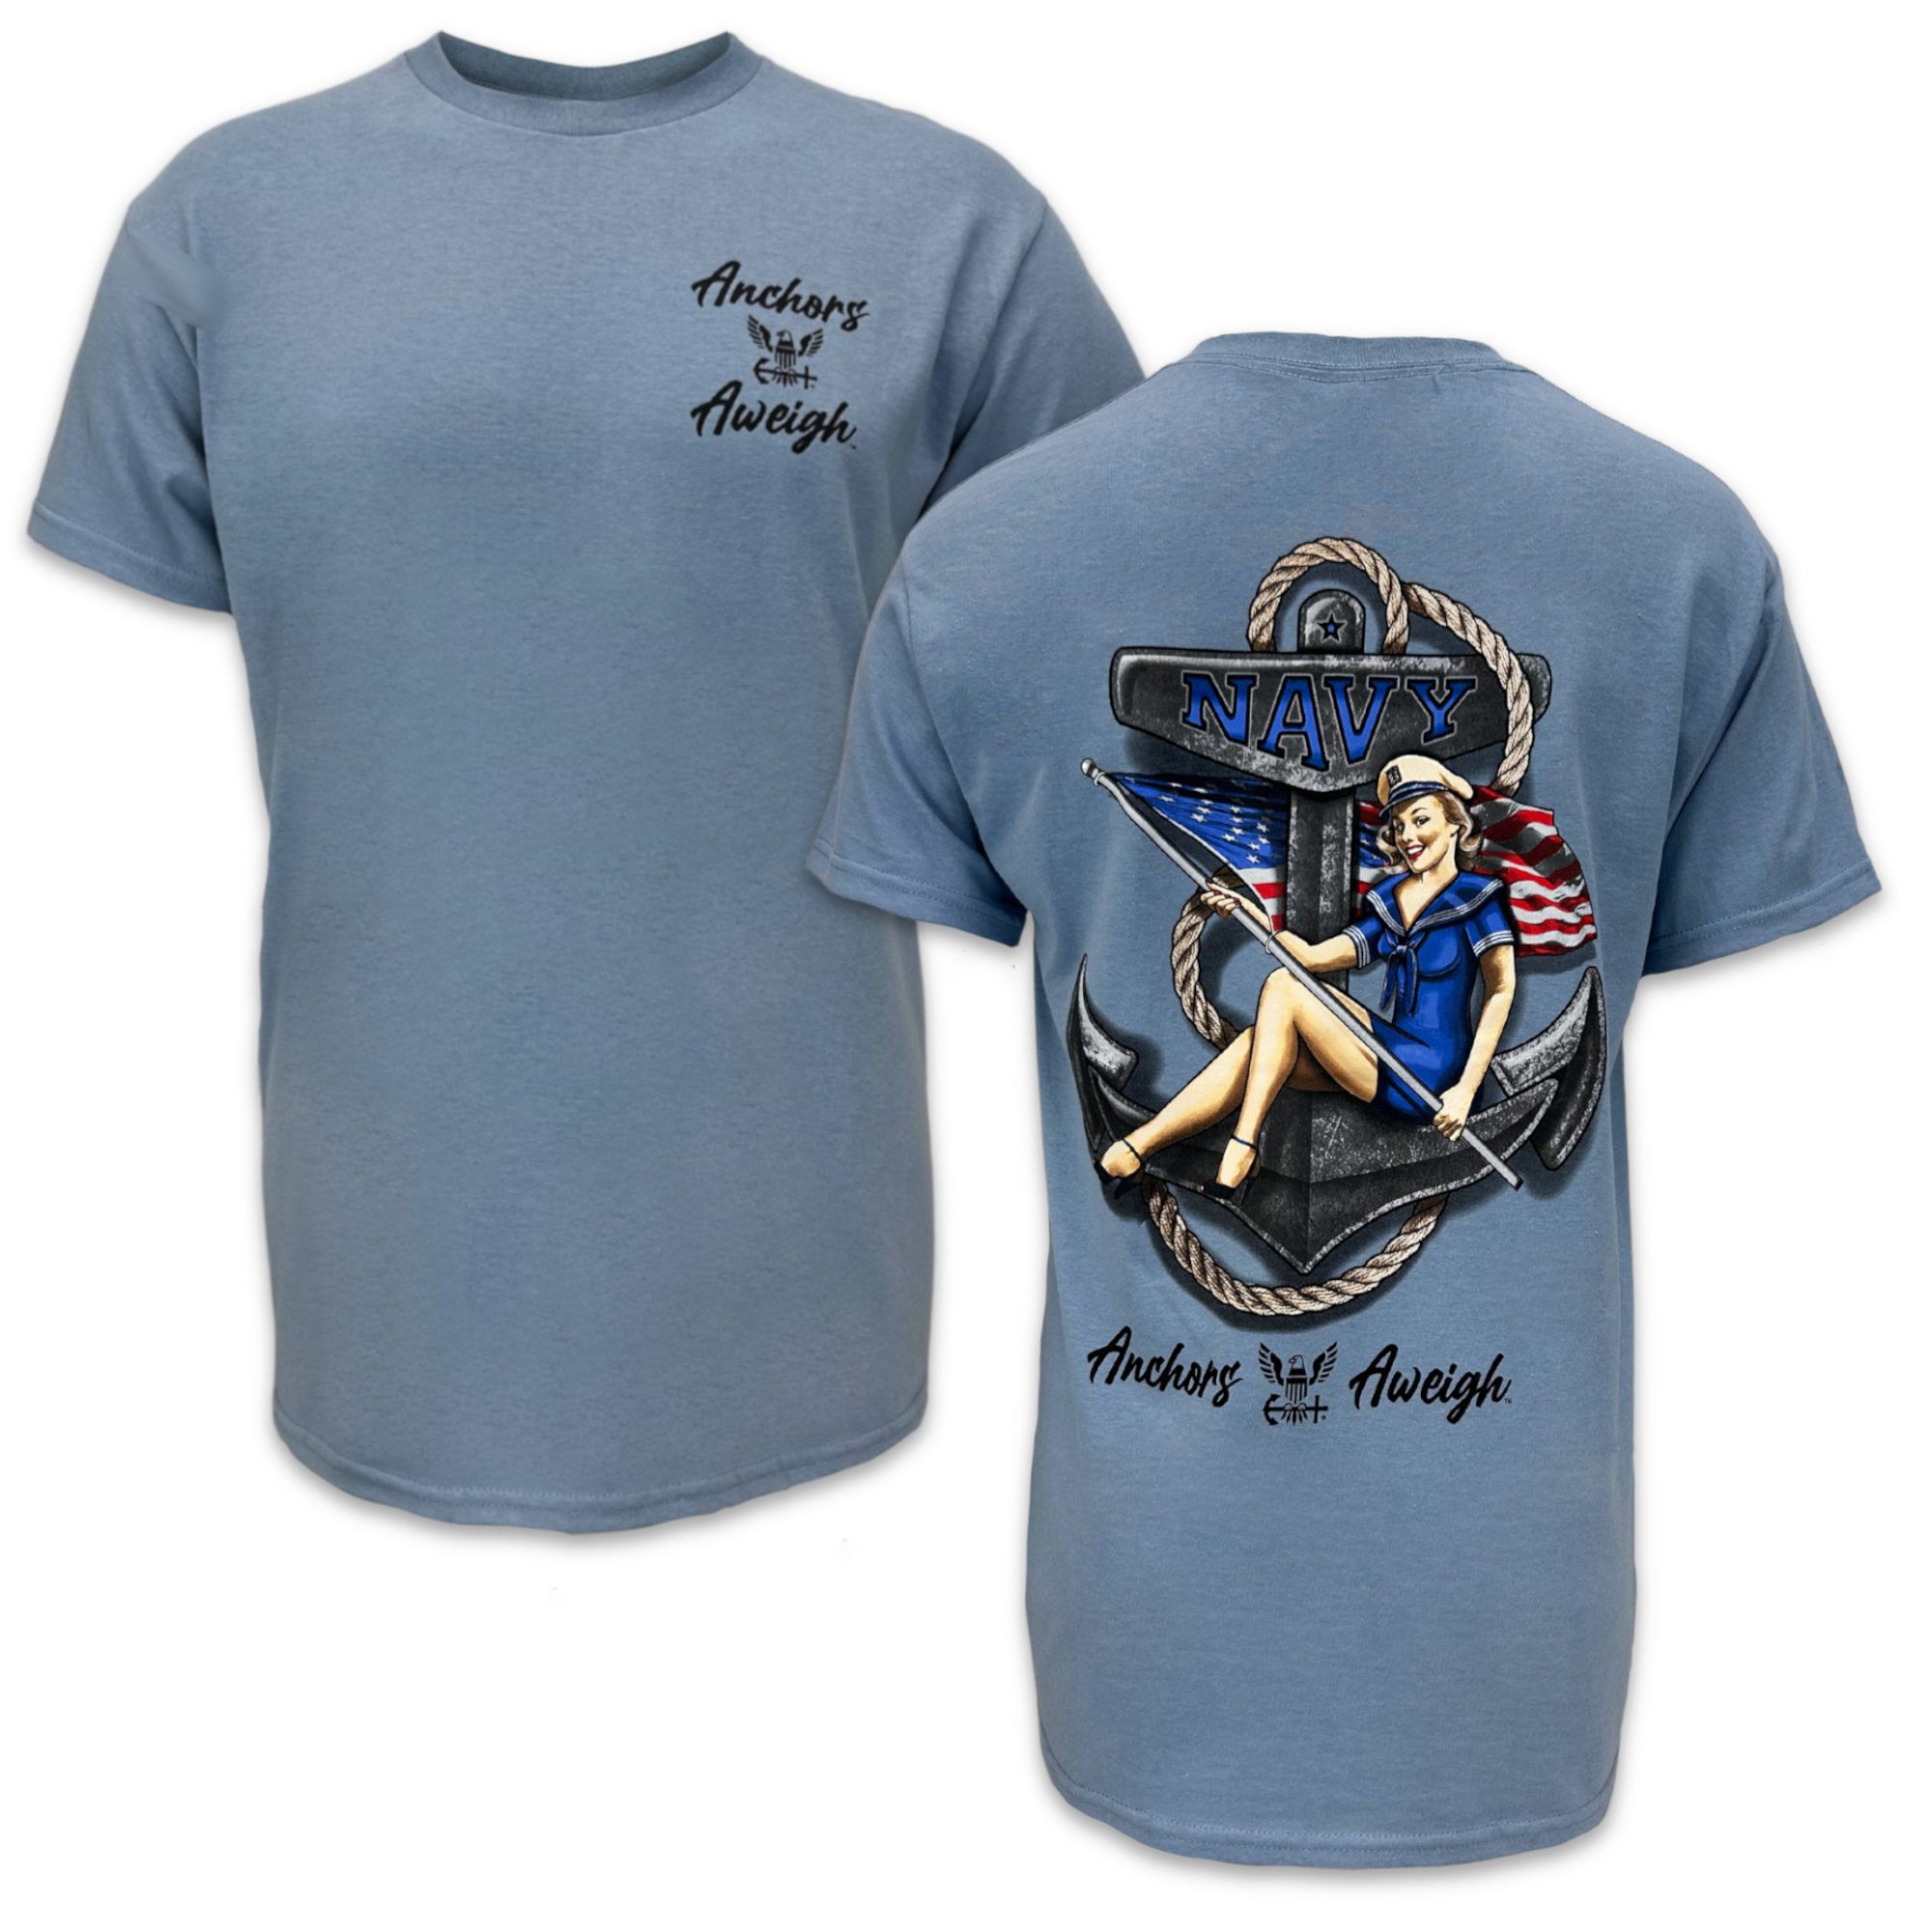 Navy Vintage Pinup T-Shirt (Stone Blue), 2XL